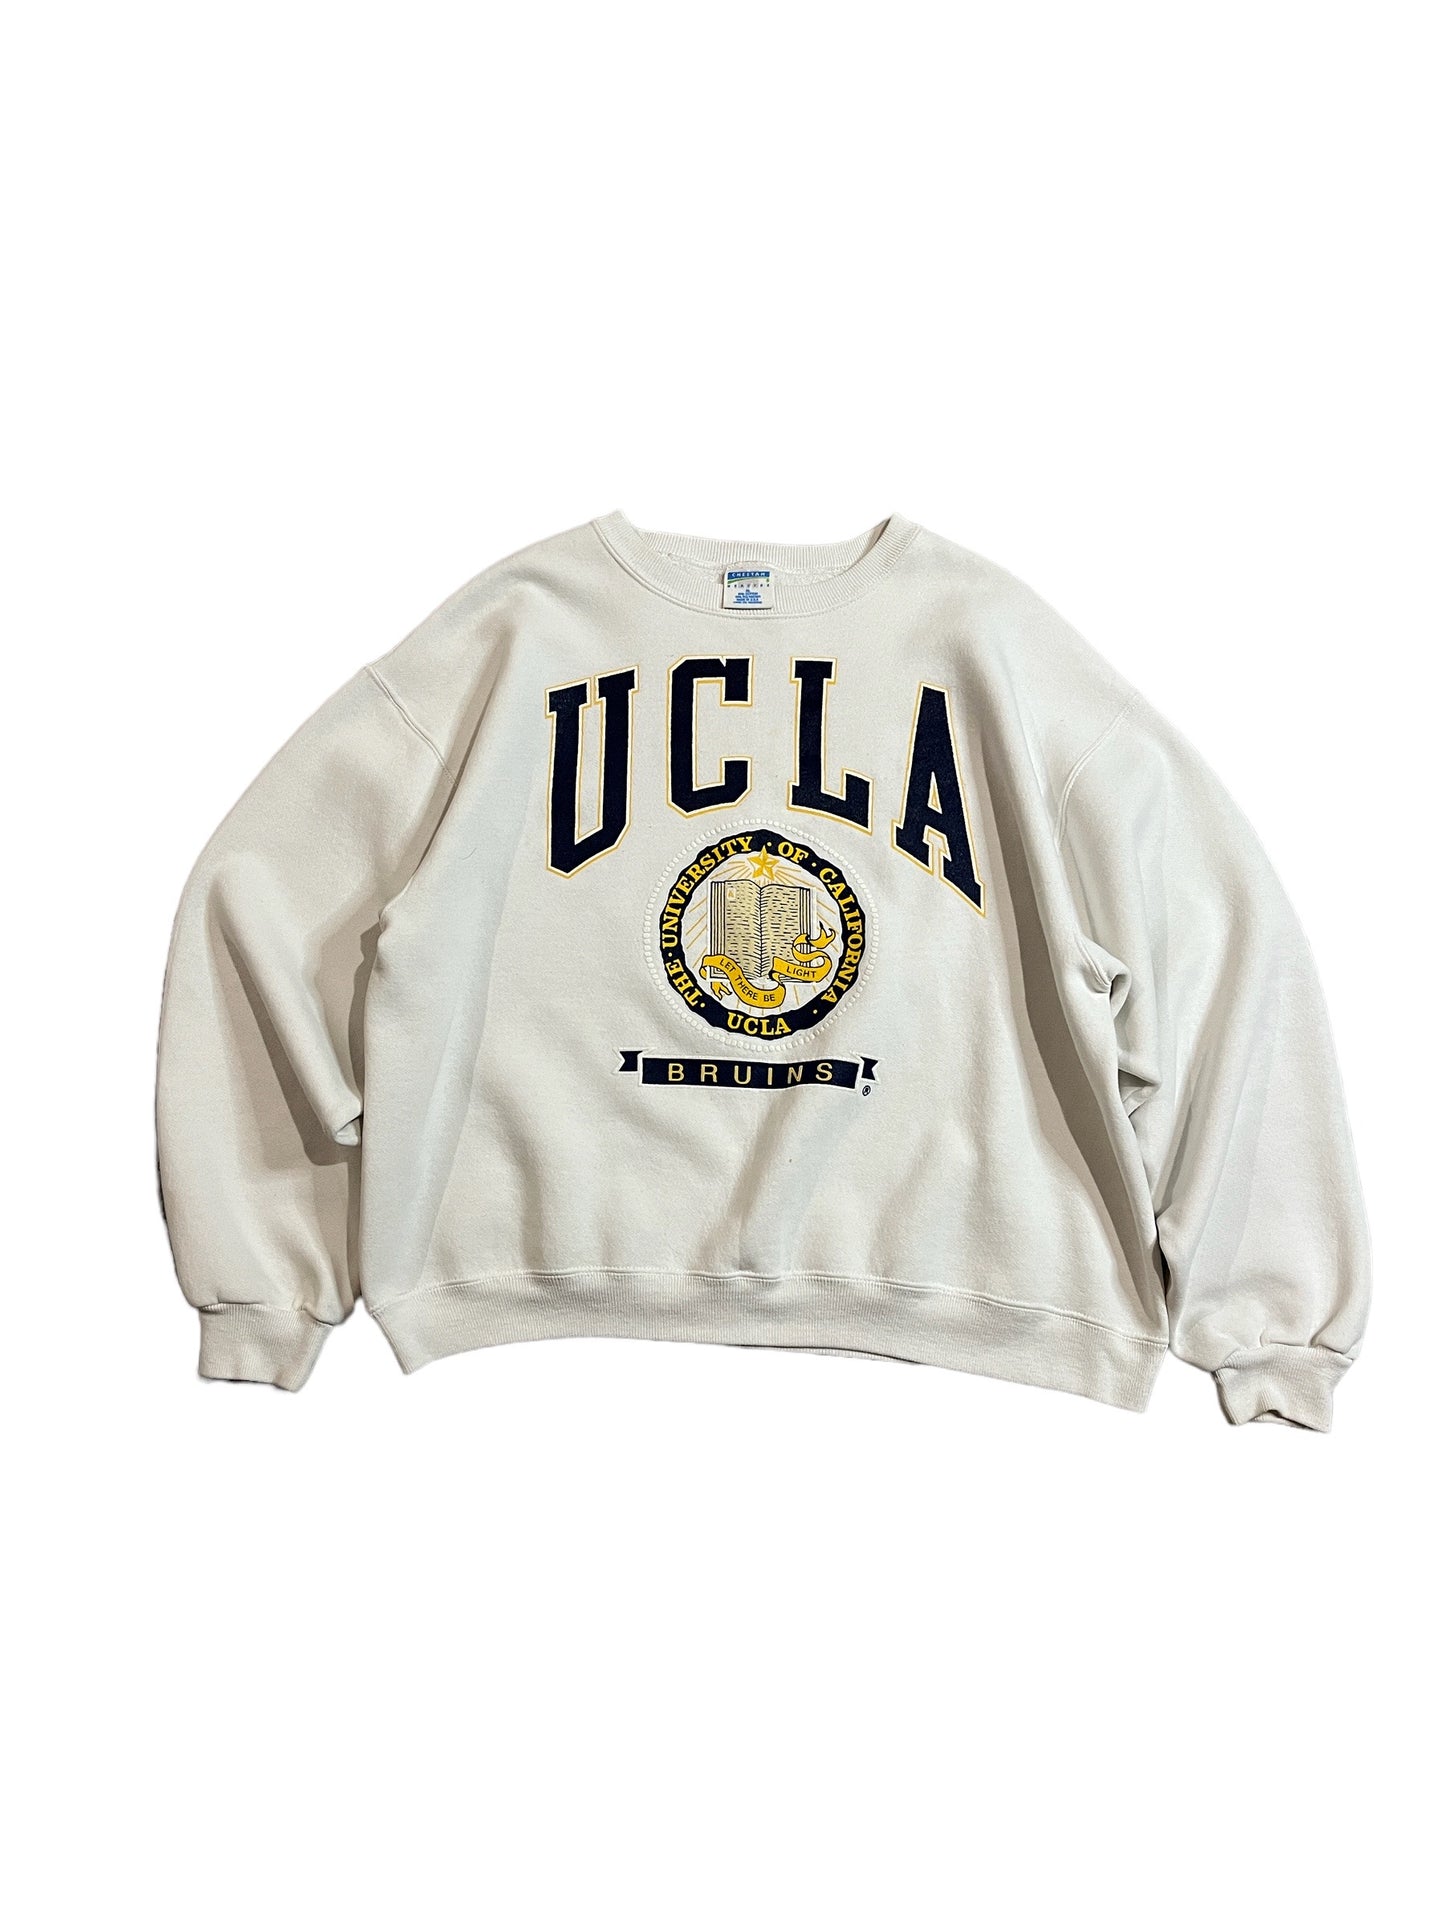 Vintage UCLA Bruins Sweater